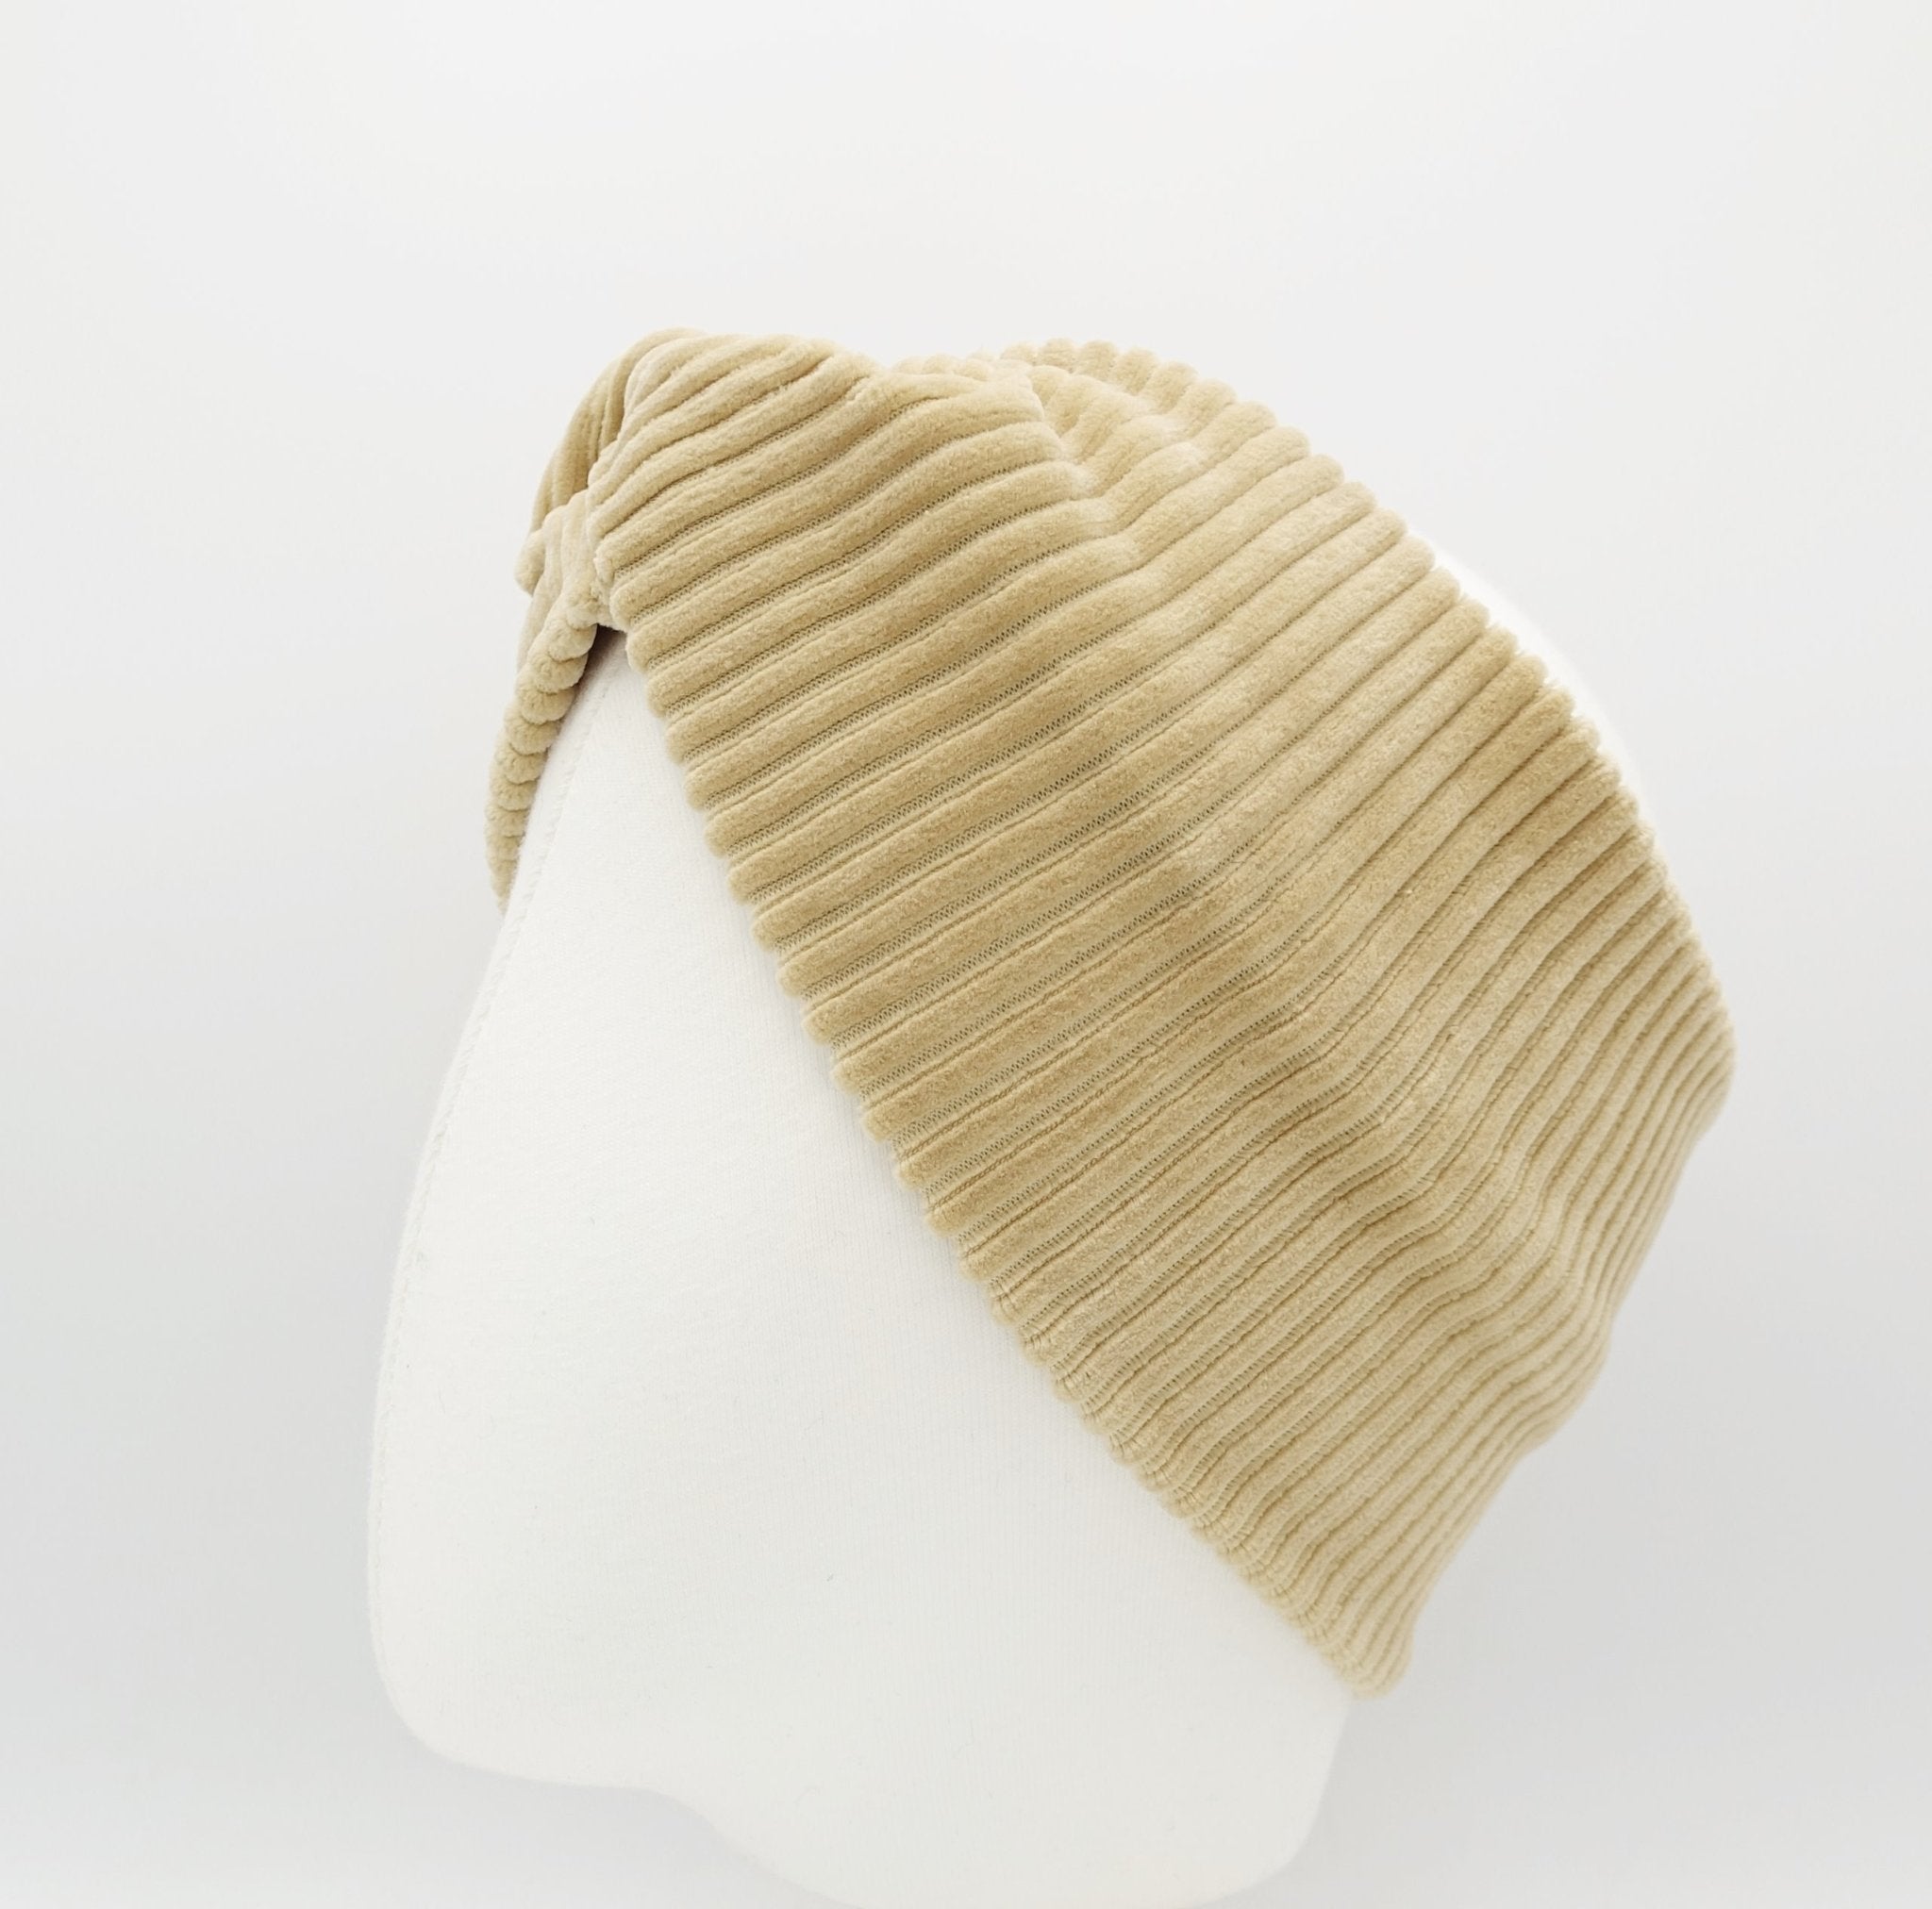 VeryShine wide corduroy span front twist non elastic headband fashion Fall Winter headband for women